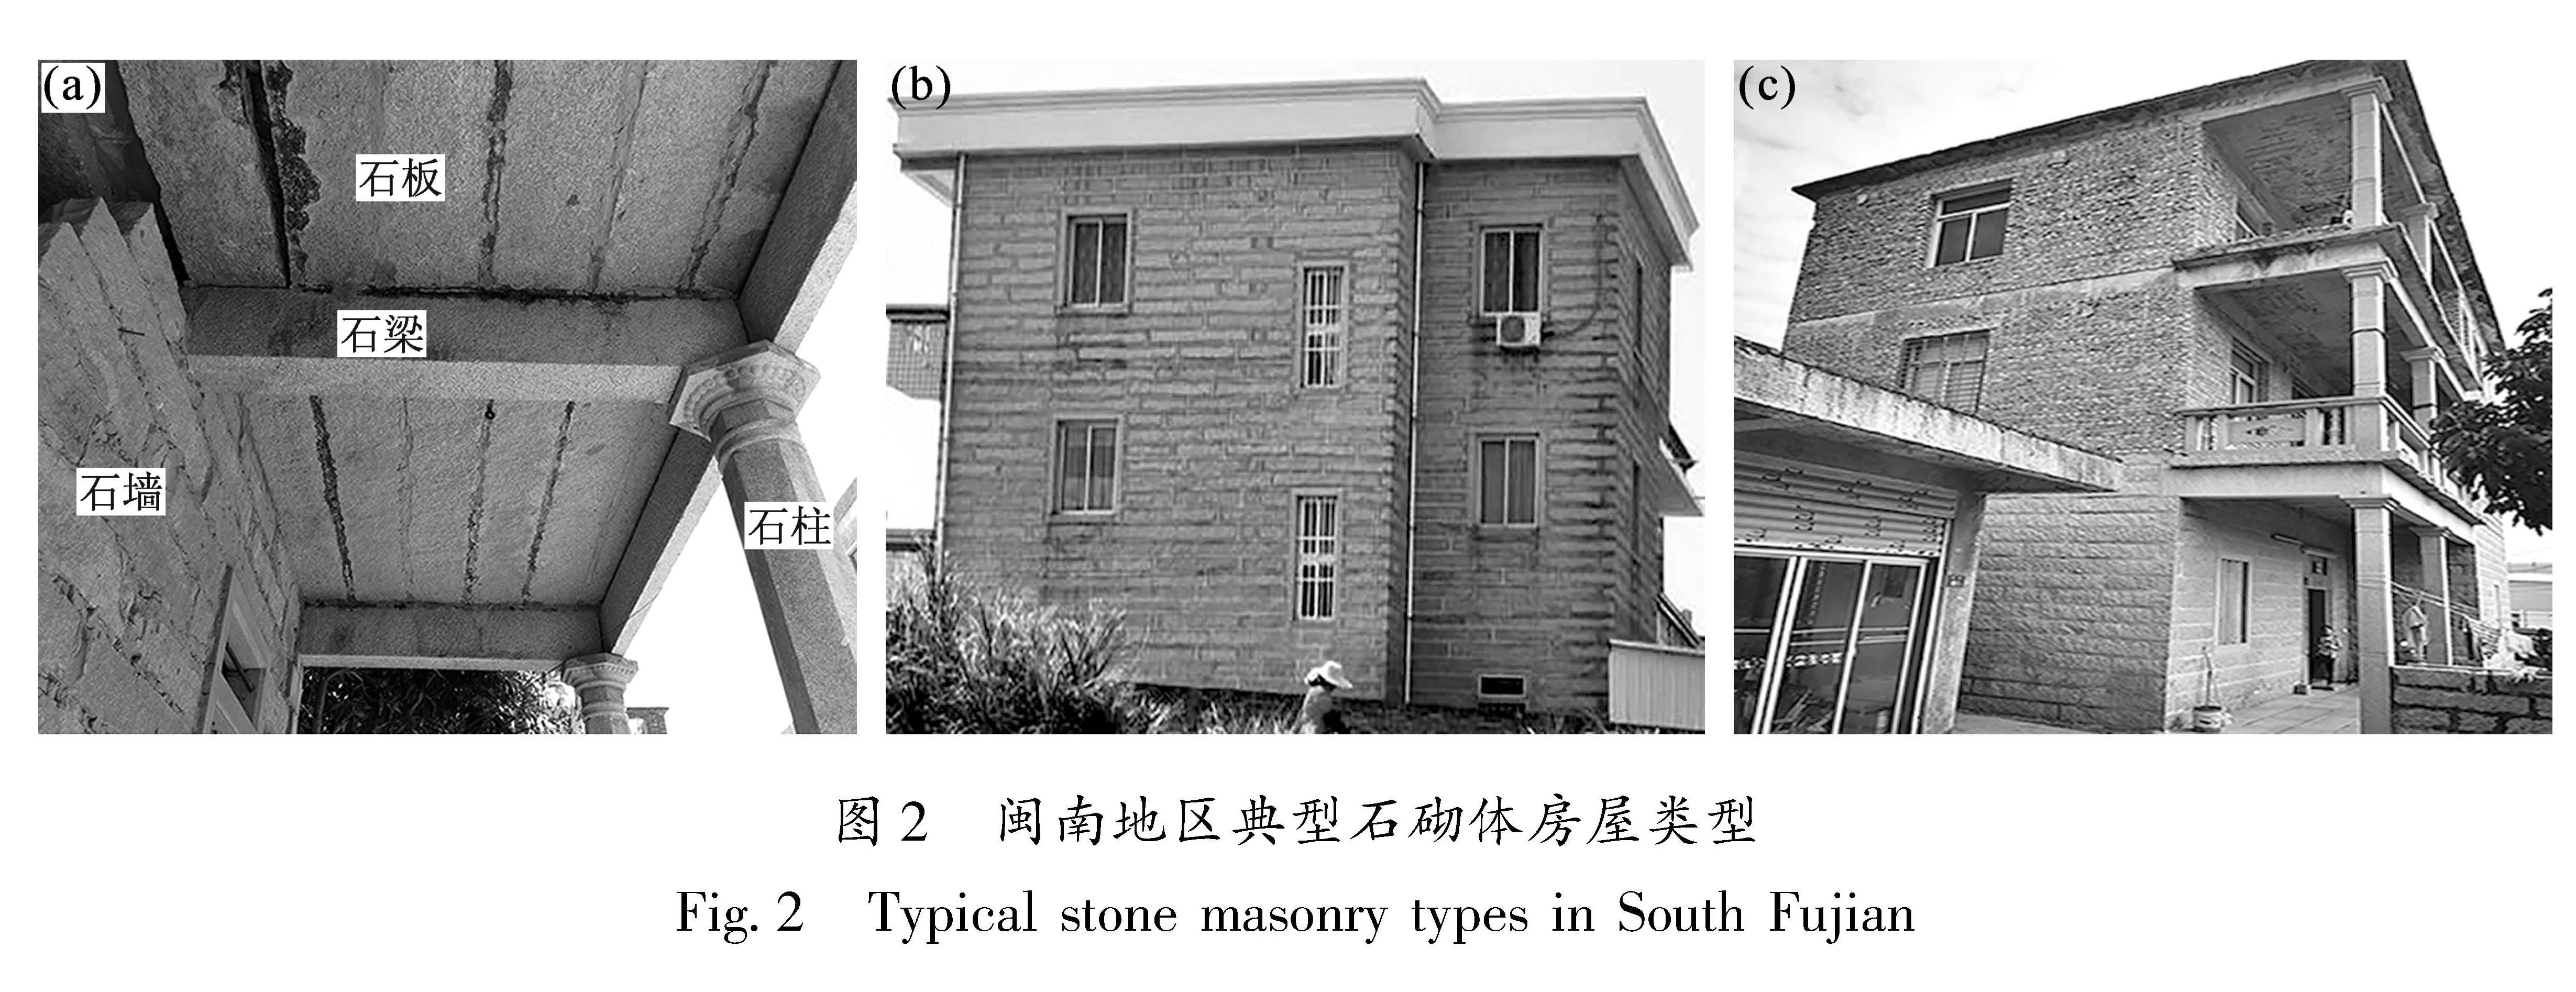 图2 闽南地区典型石砌体房屋类型<br/>Fig.2 Typical stone masonry types in South Fujian